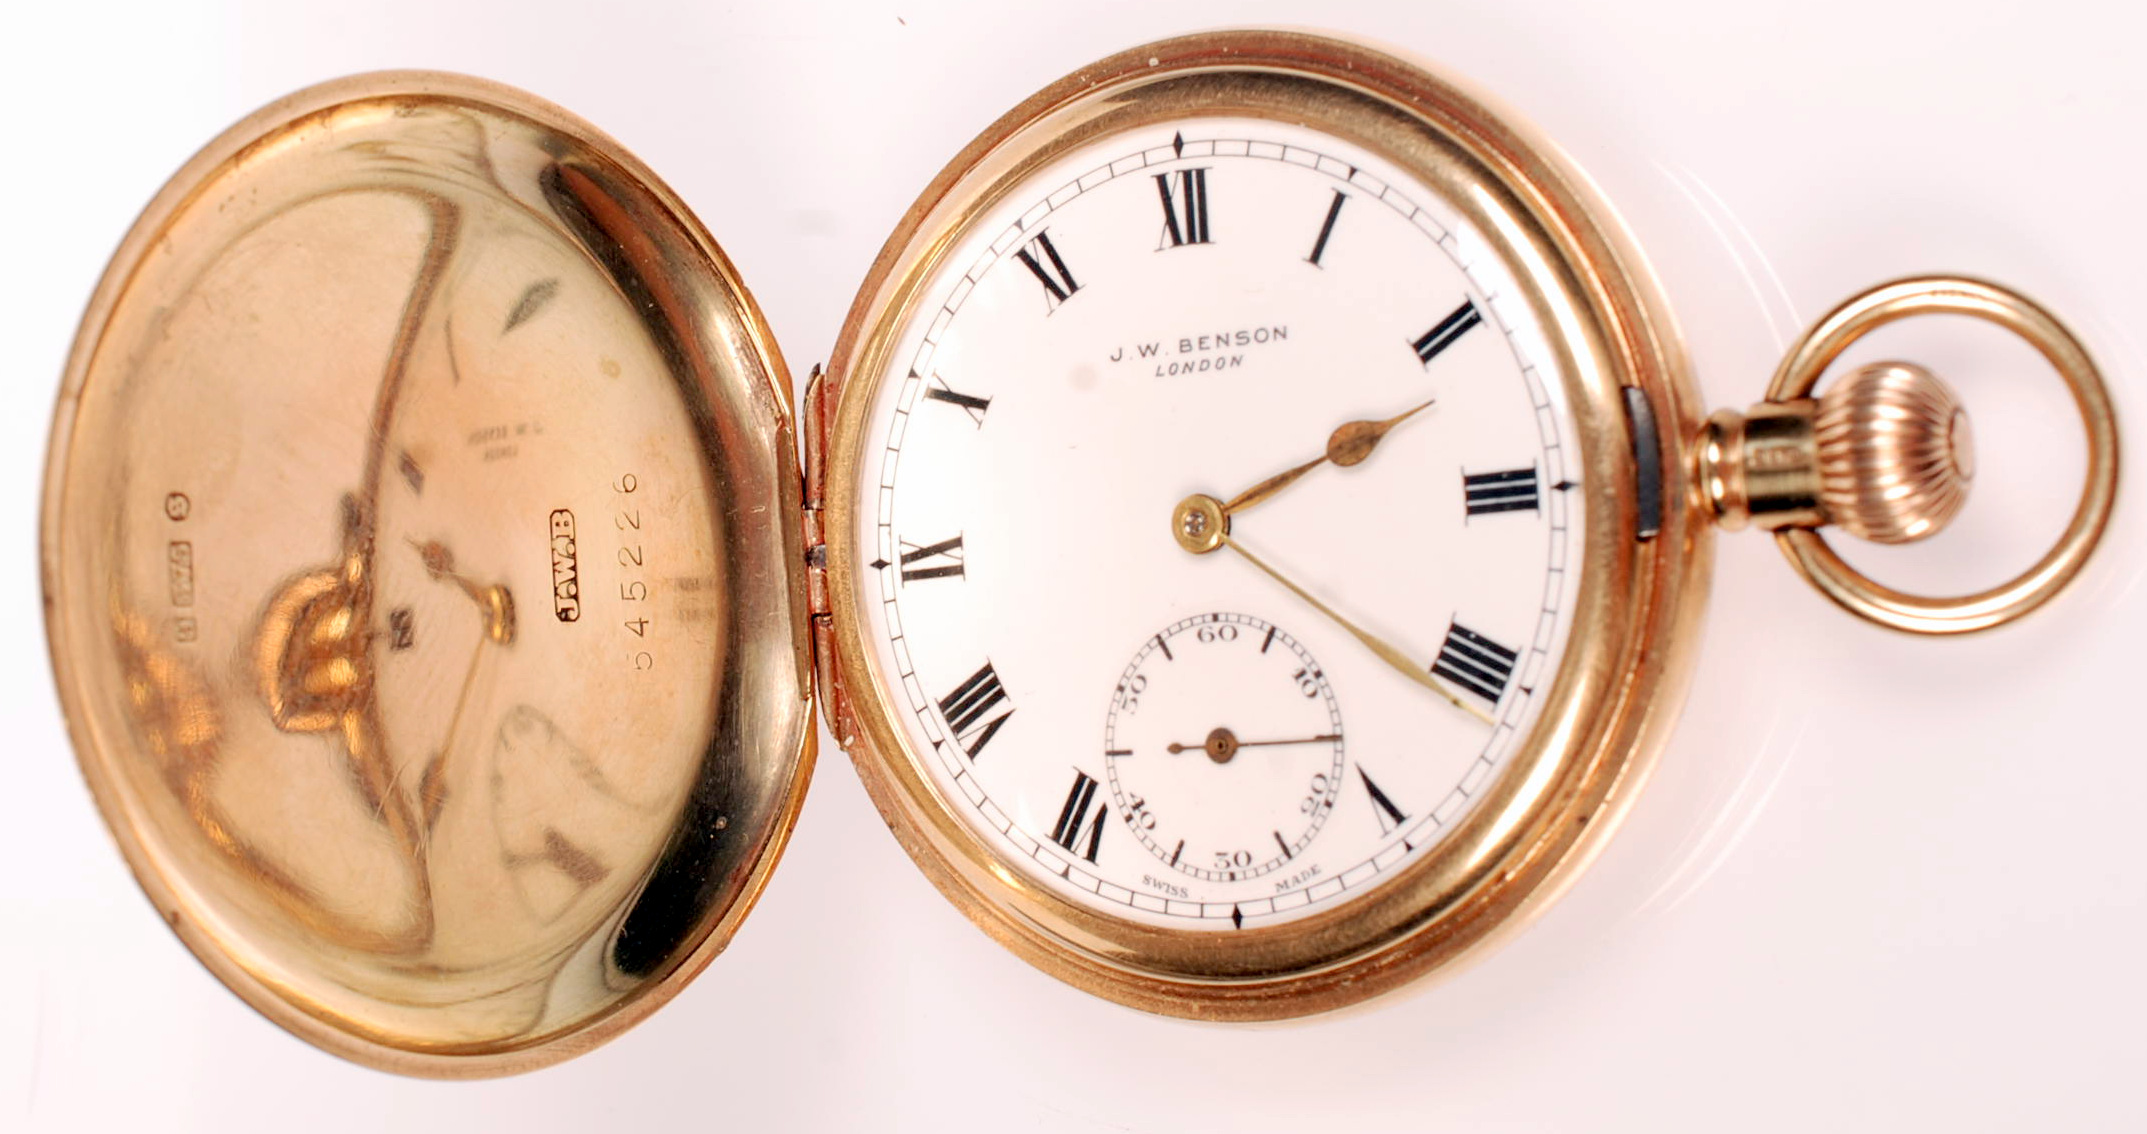 AMENDMENT TO CATALOGUE
A Swiss small full hunter keyless 9ct gold pocket watch retailed by J.W.